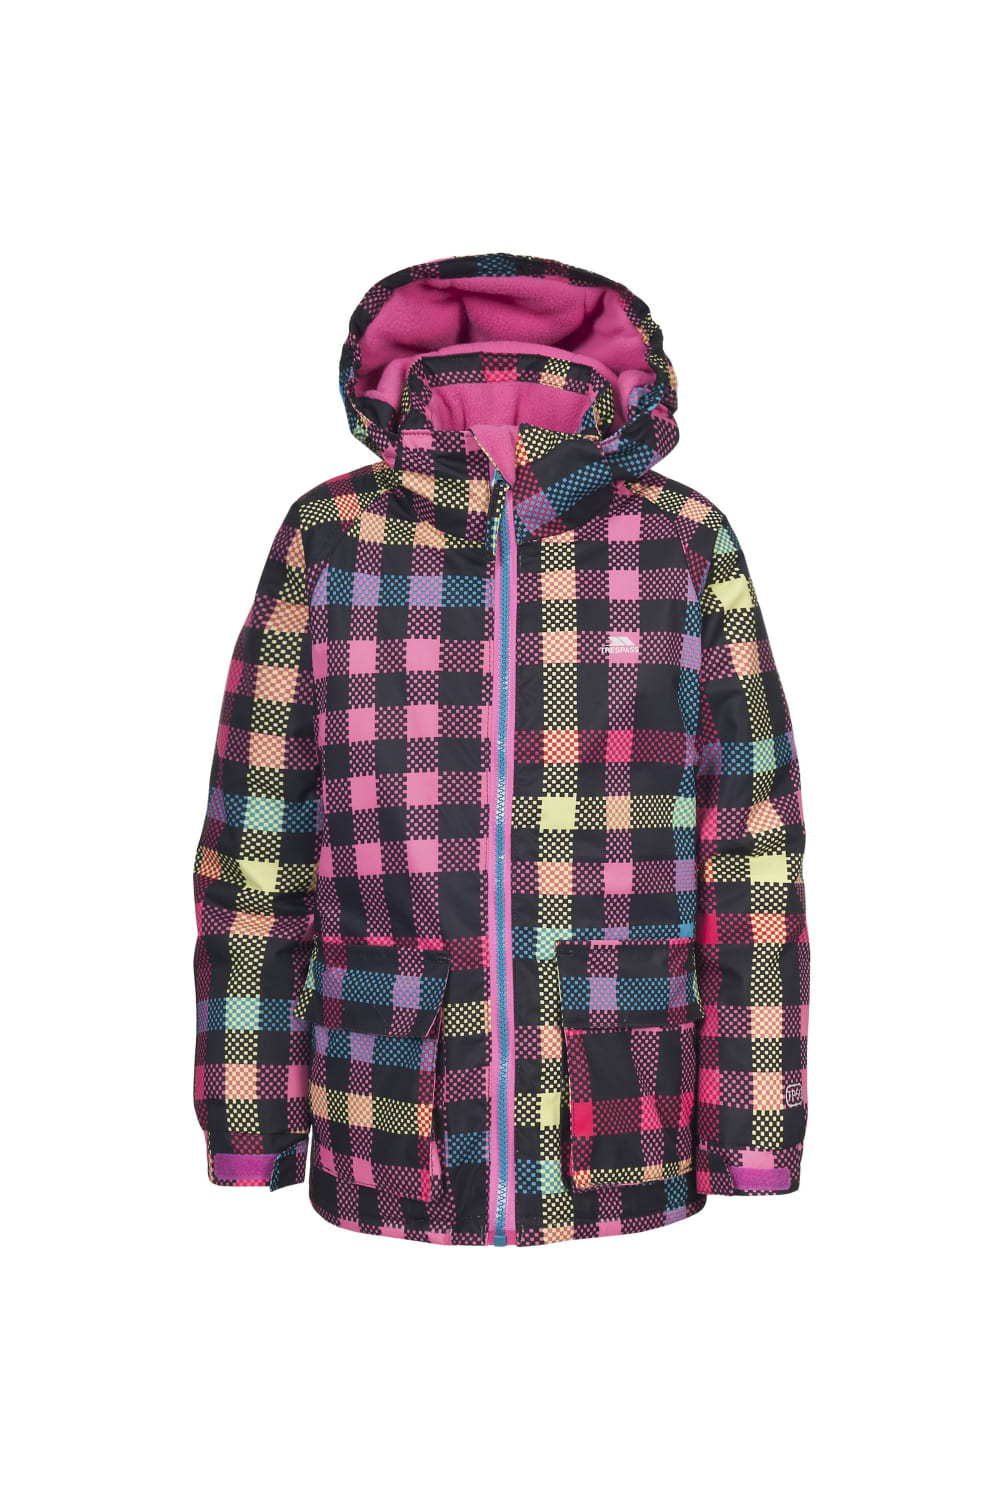 Trespass Childrens Girls Marnie Zip Up Waterproof Snow Jacket (Black Check)